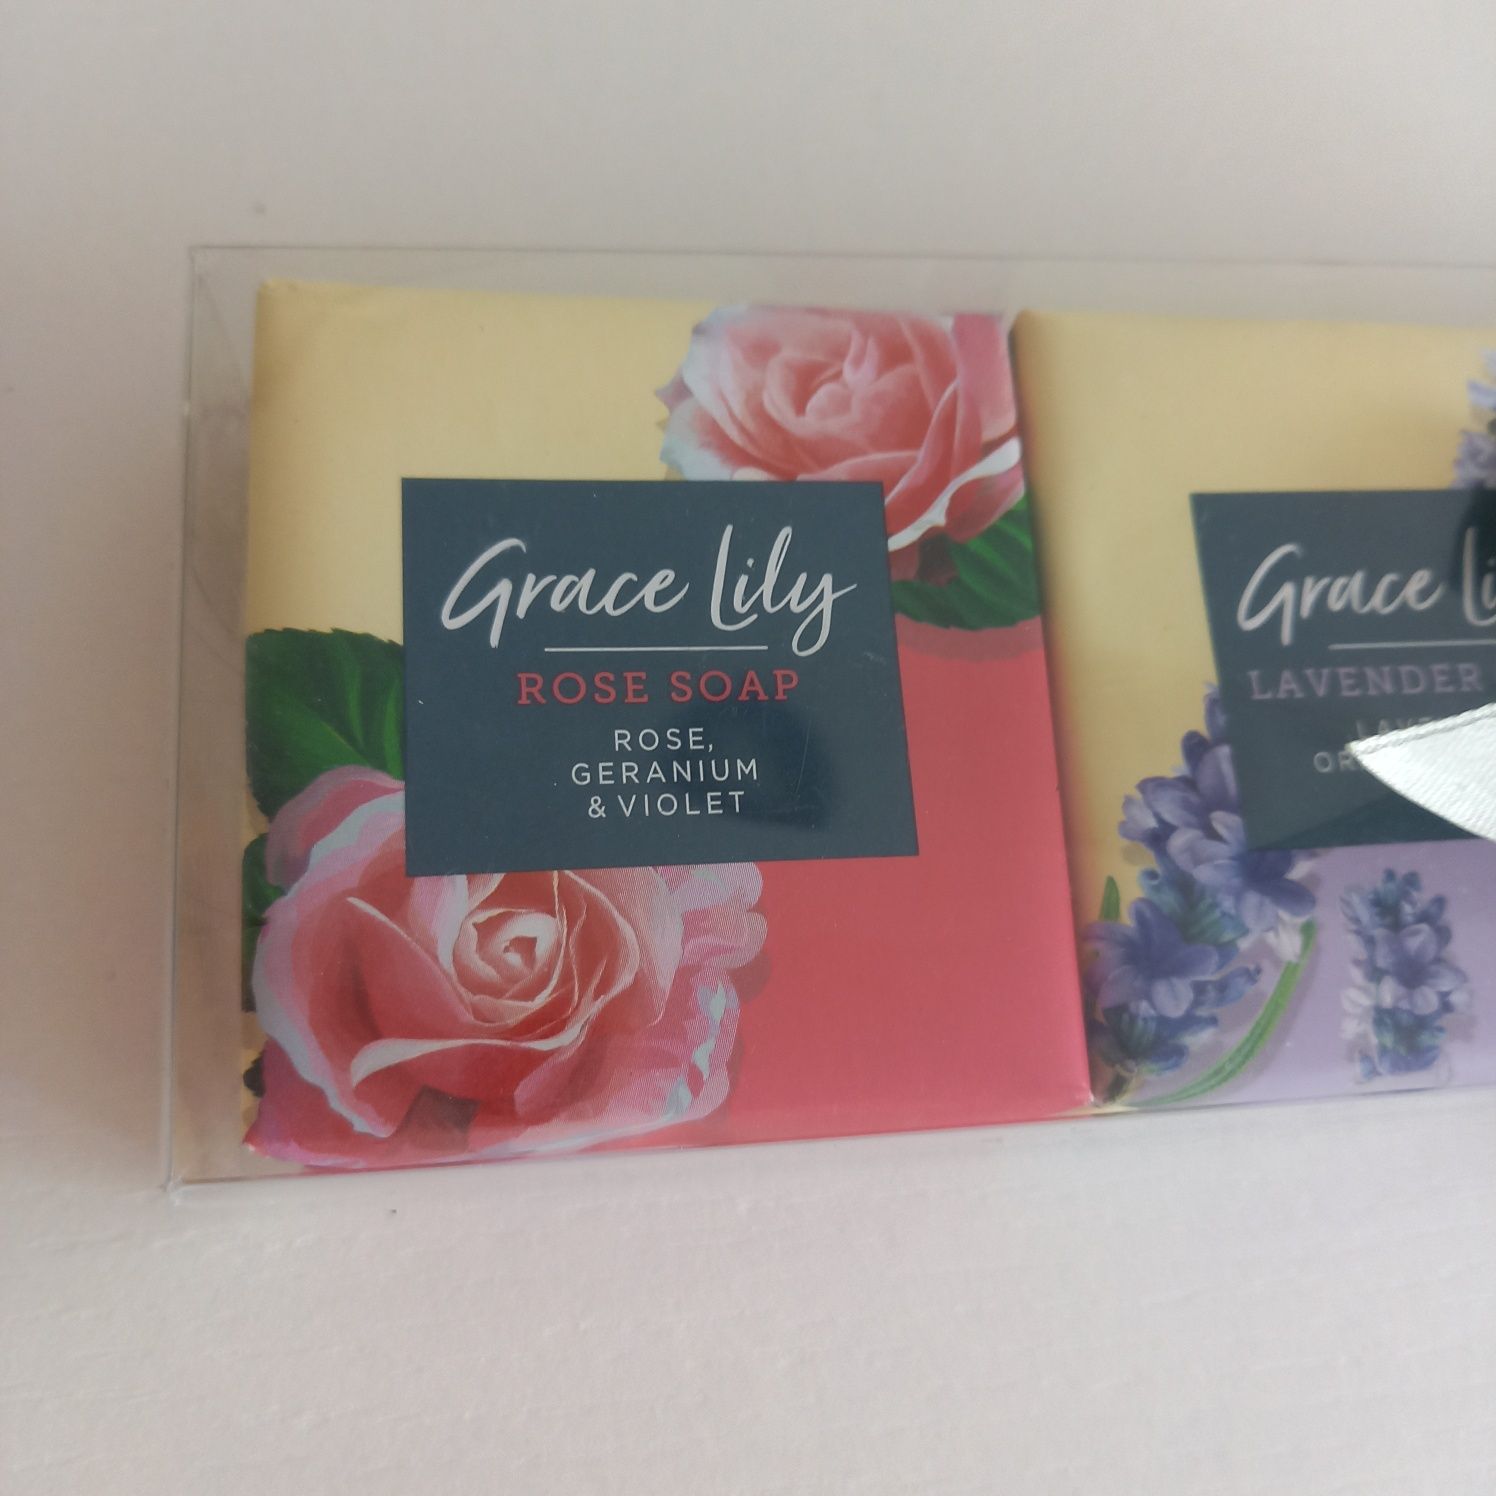 Mydełka Grace lily 3x80g róża lawenda magnolia mydło